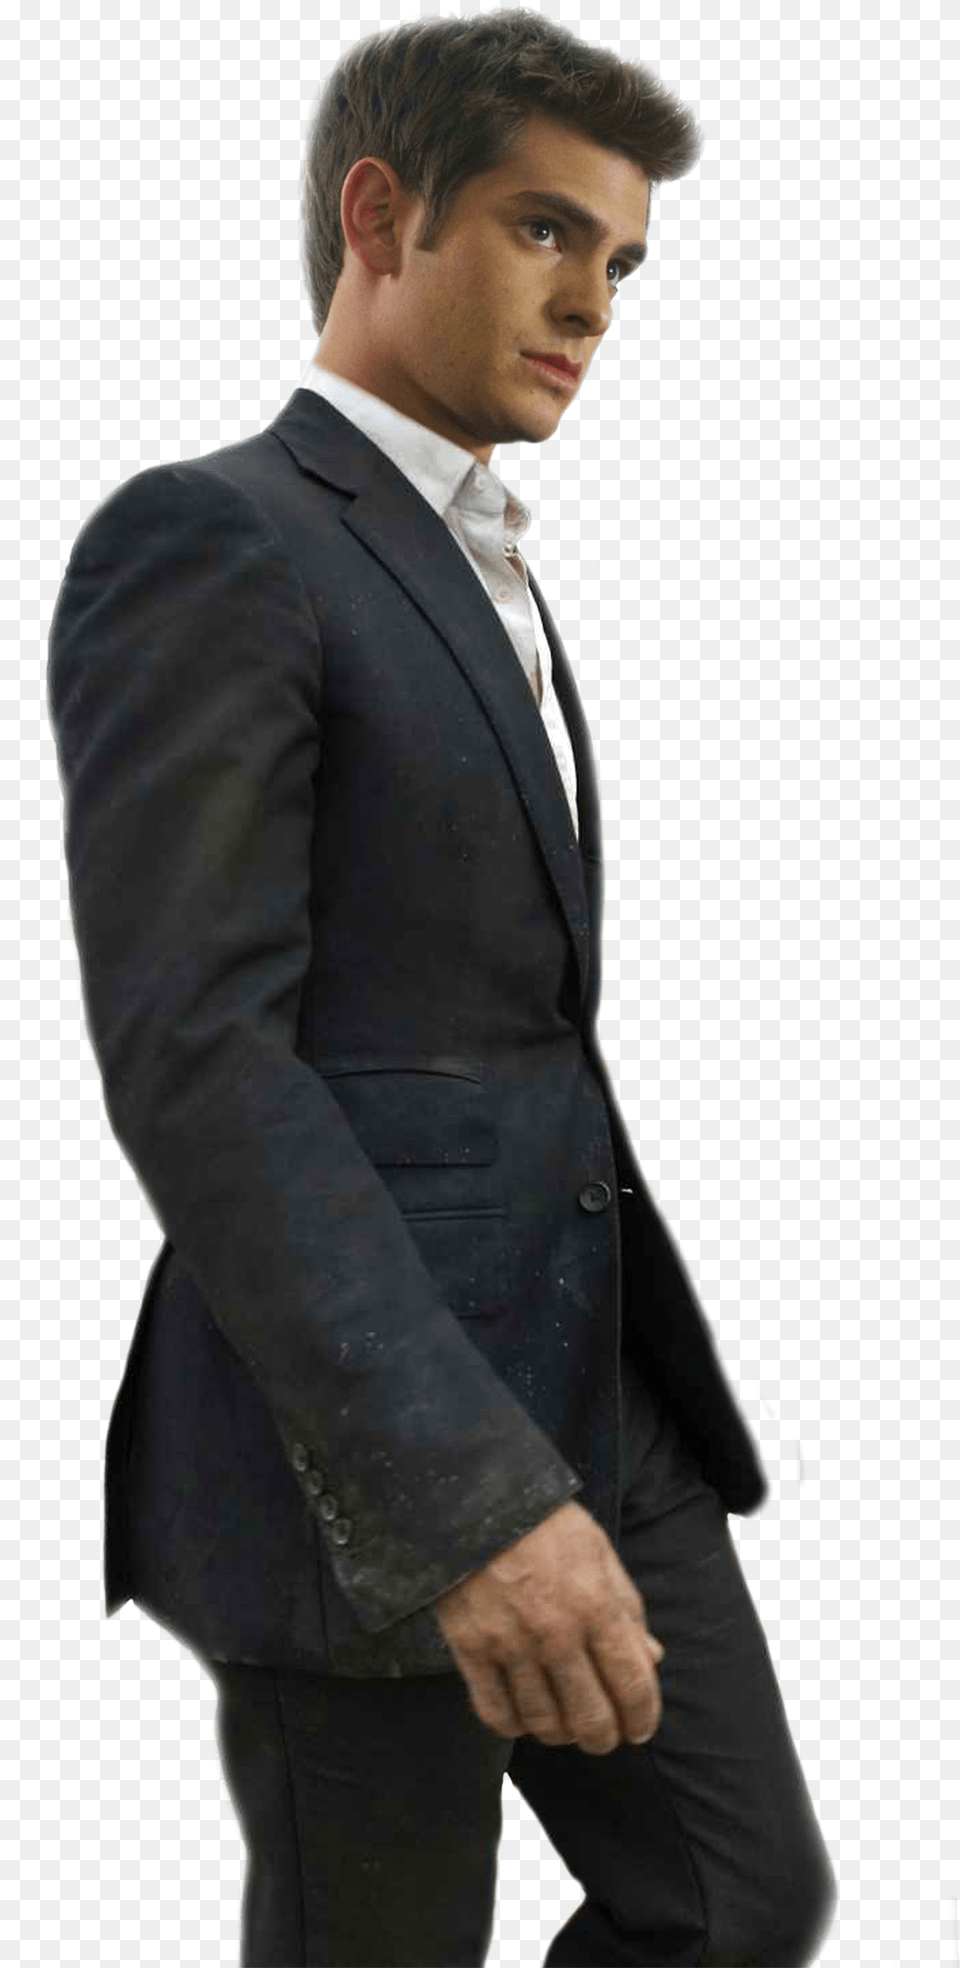 Andrew Garfield Portrayed Peter Parker A Tuxedo, Accessories, Tie, Suit, Jacket Png